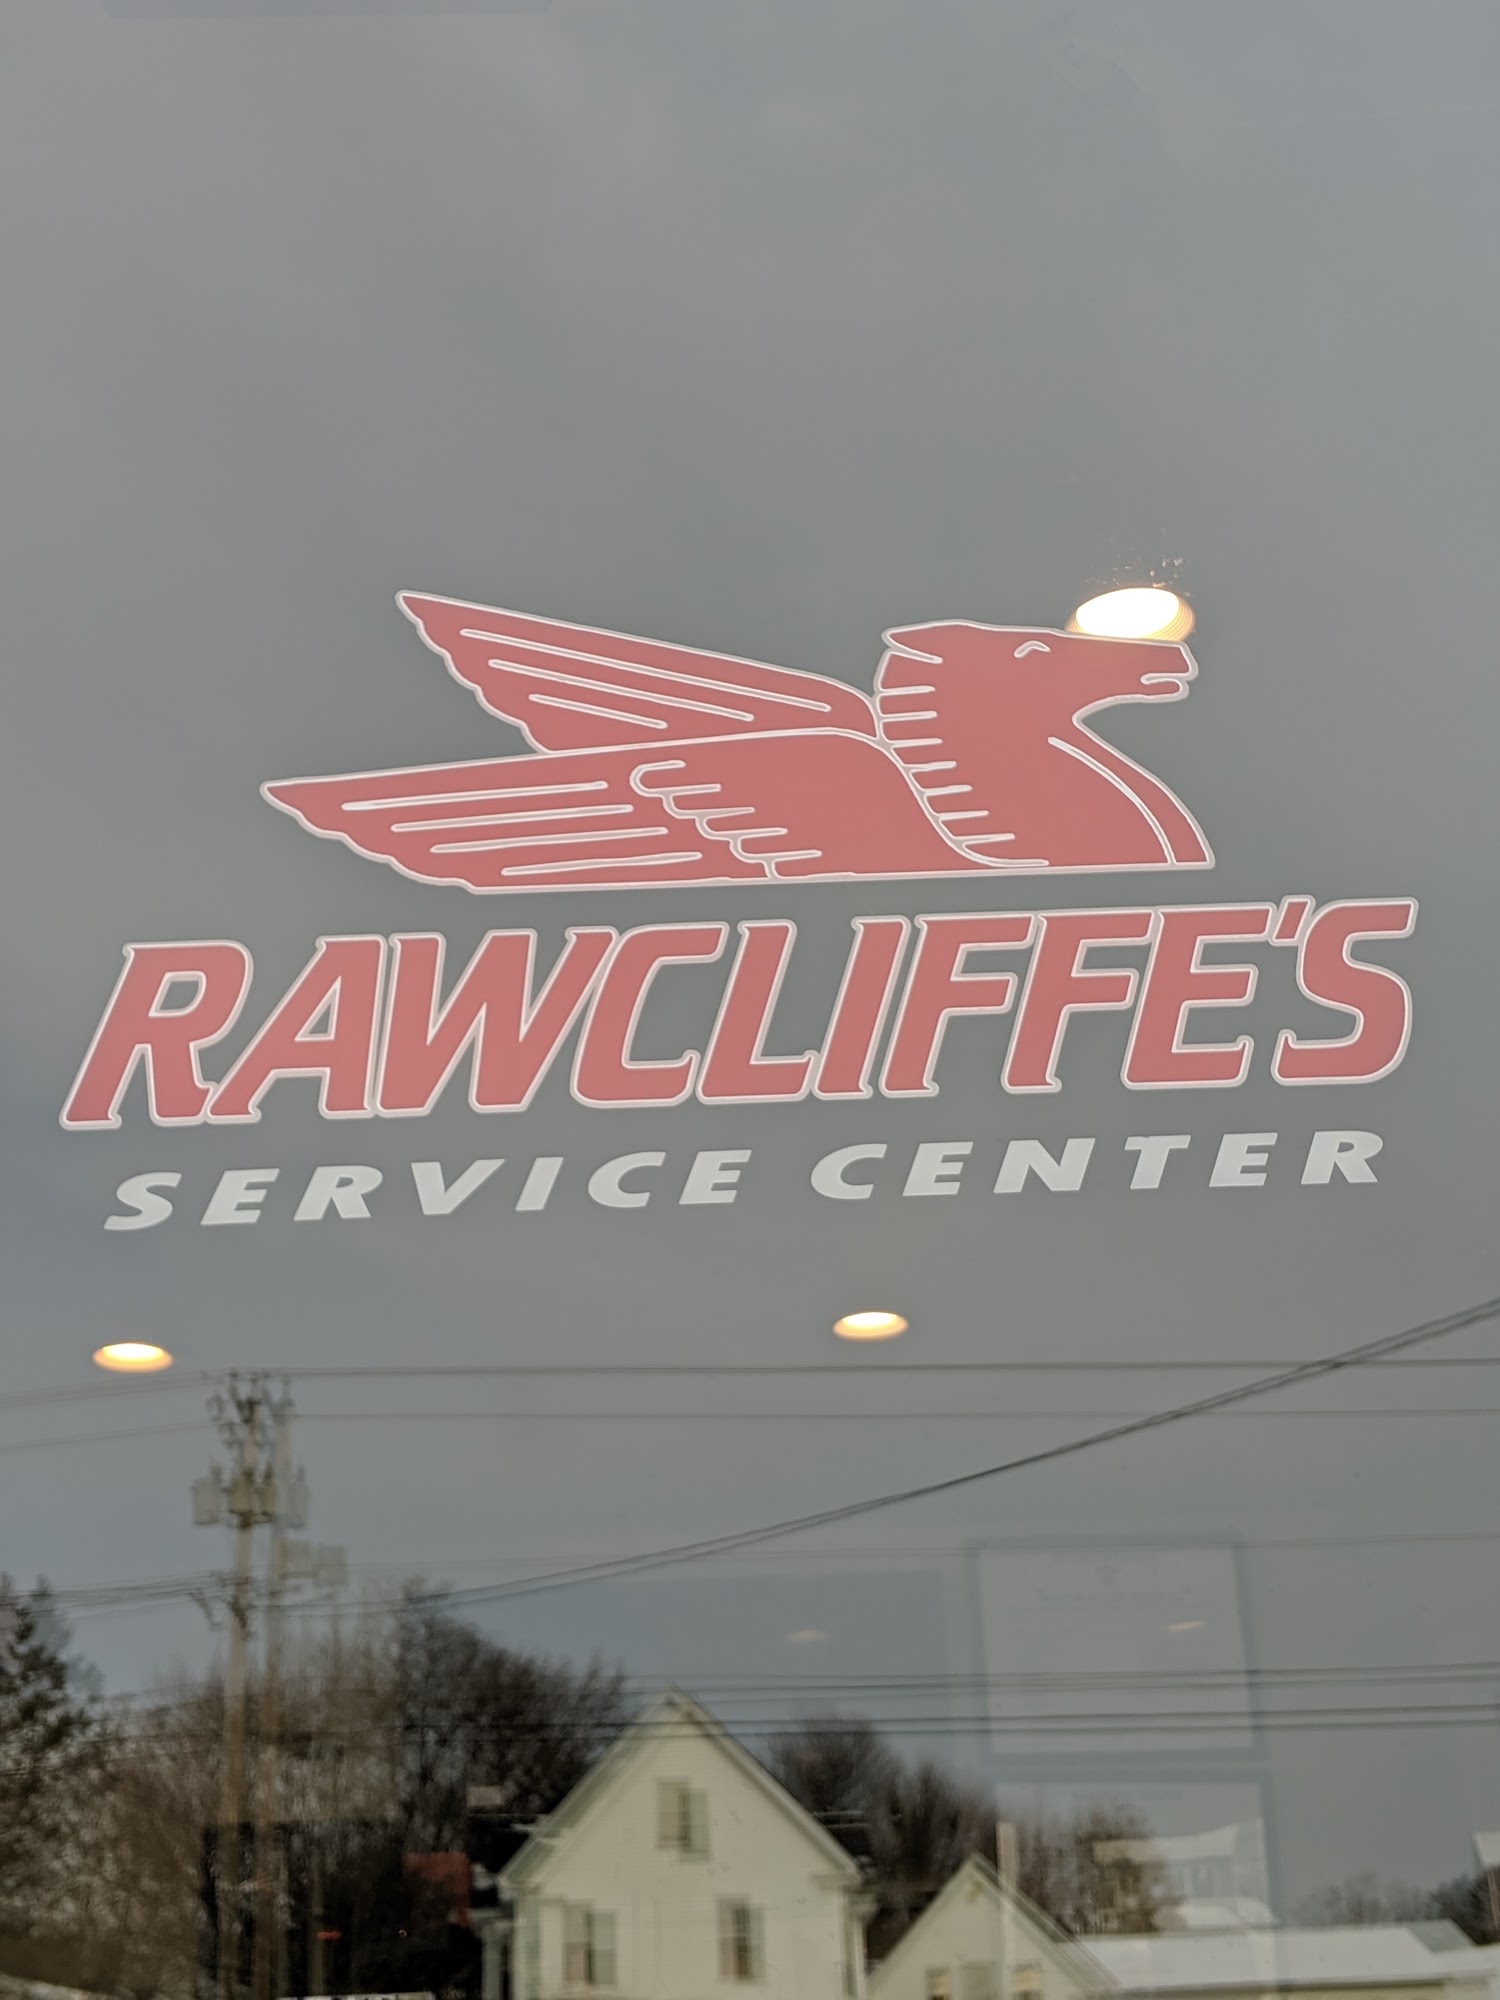 Rawcliffe's service center